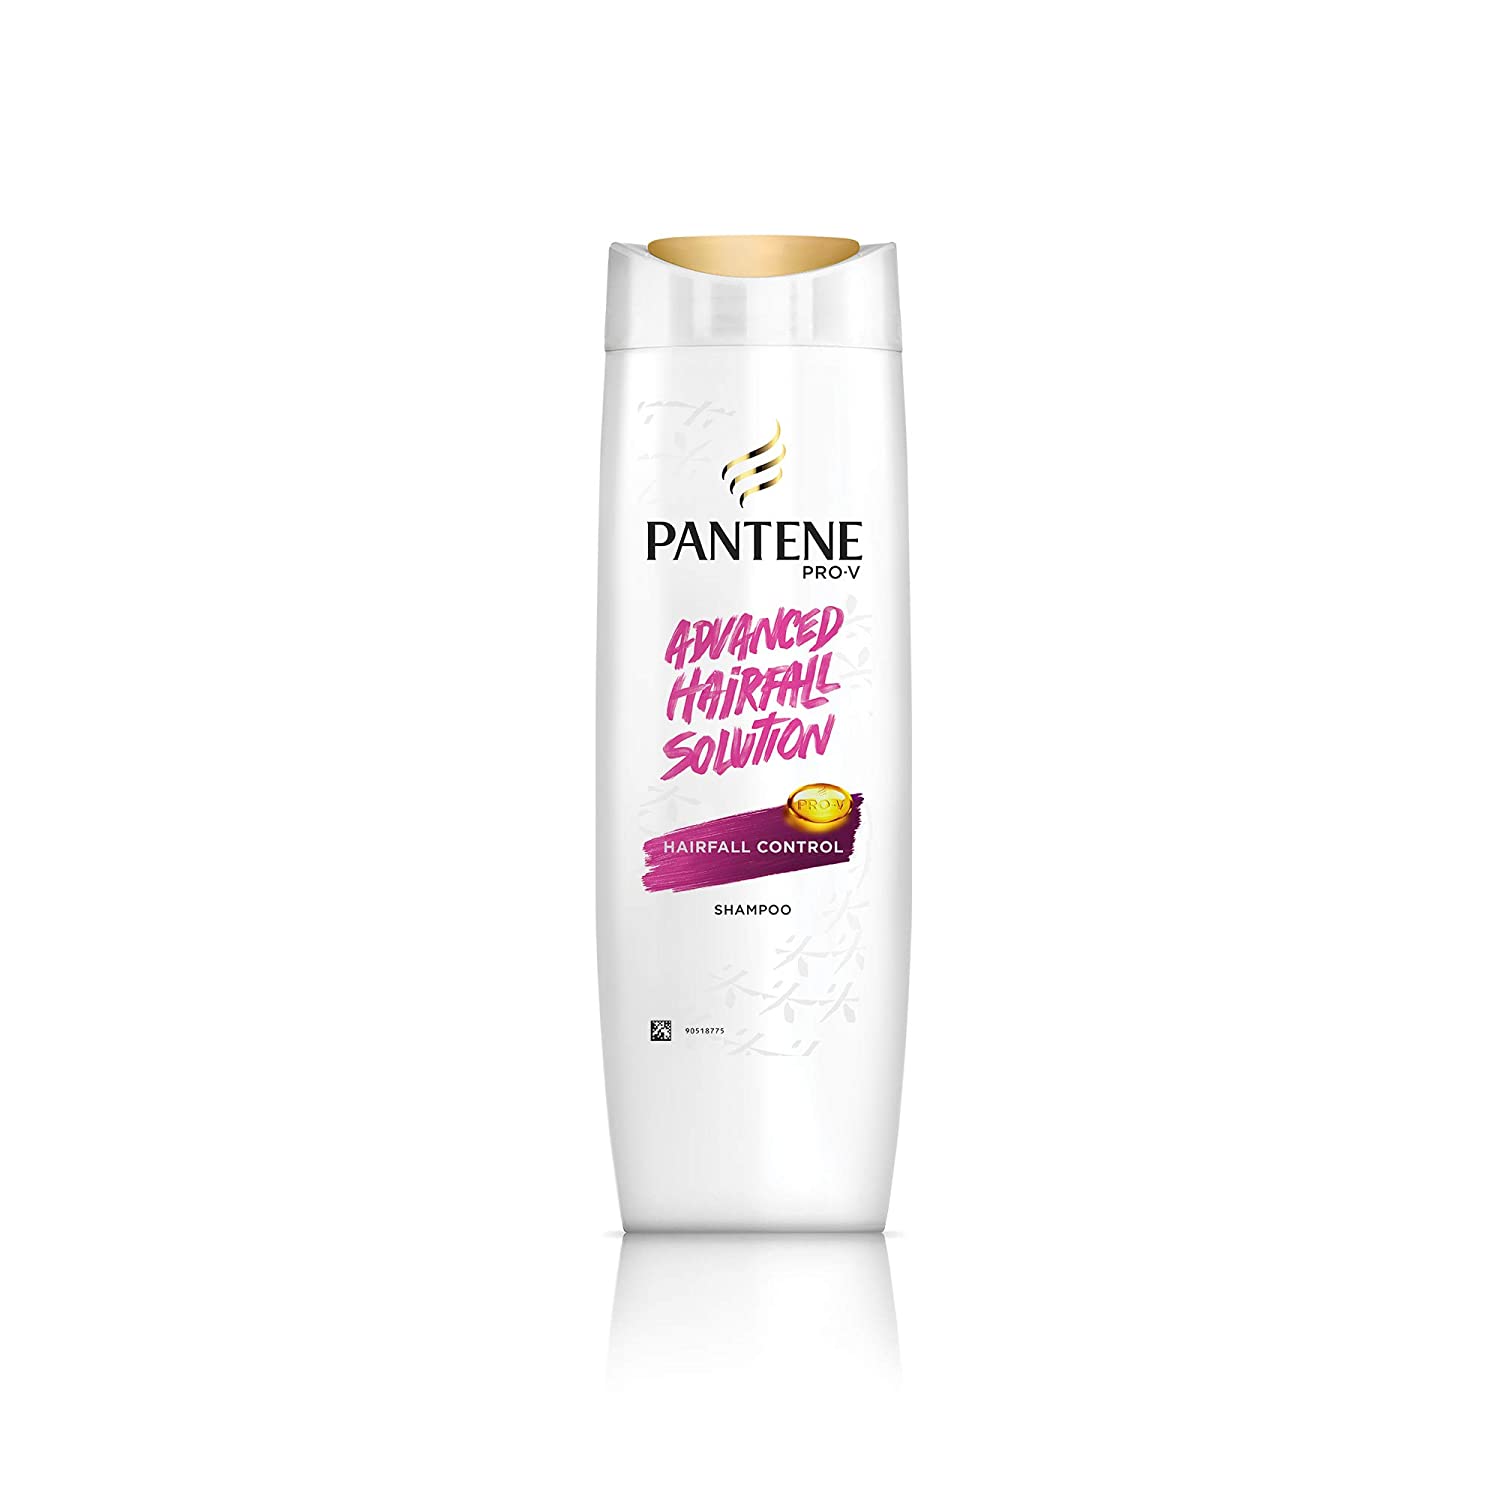 Pantene Advanced Hairfall Solution Anti-Hairfall Shampoo 340ml